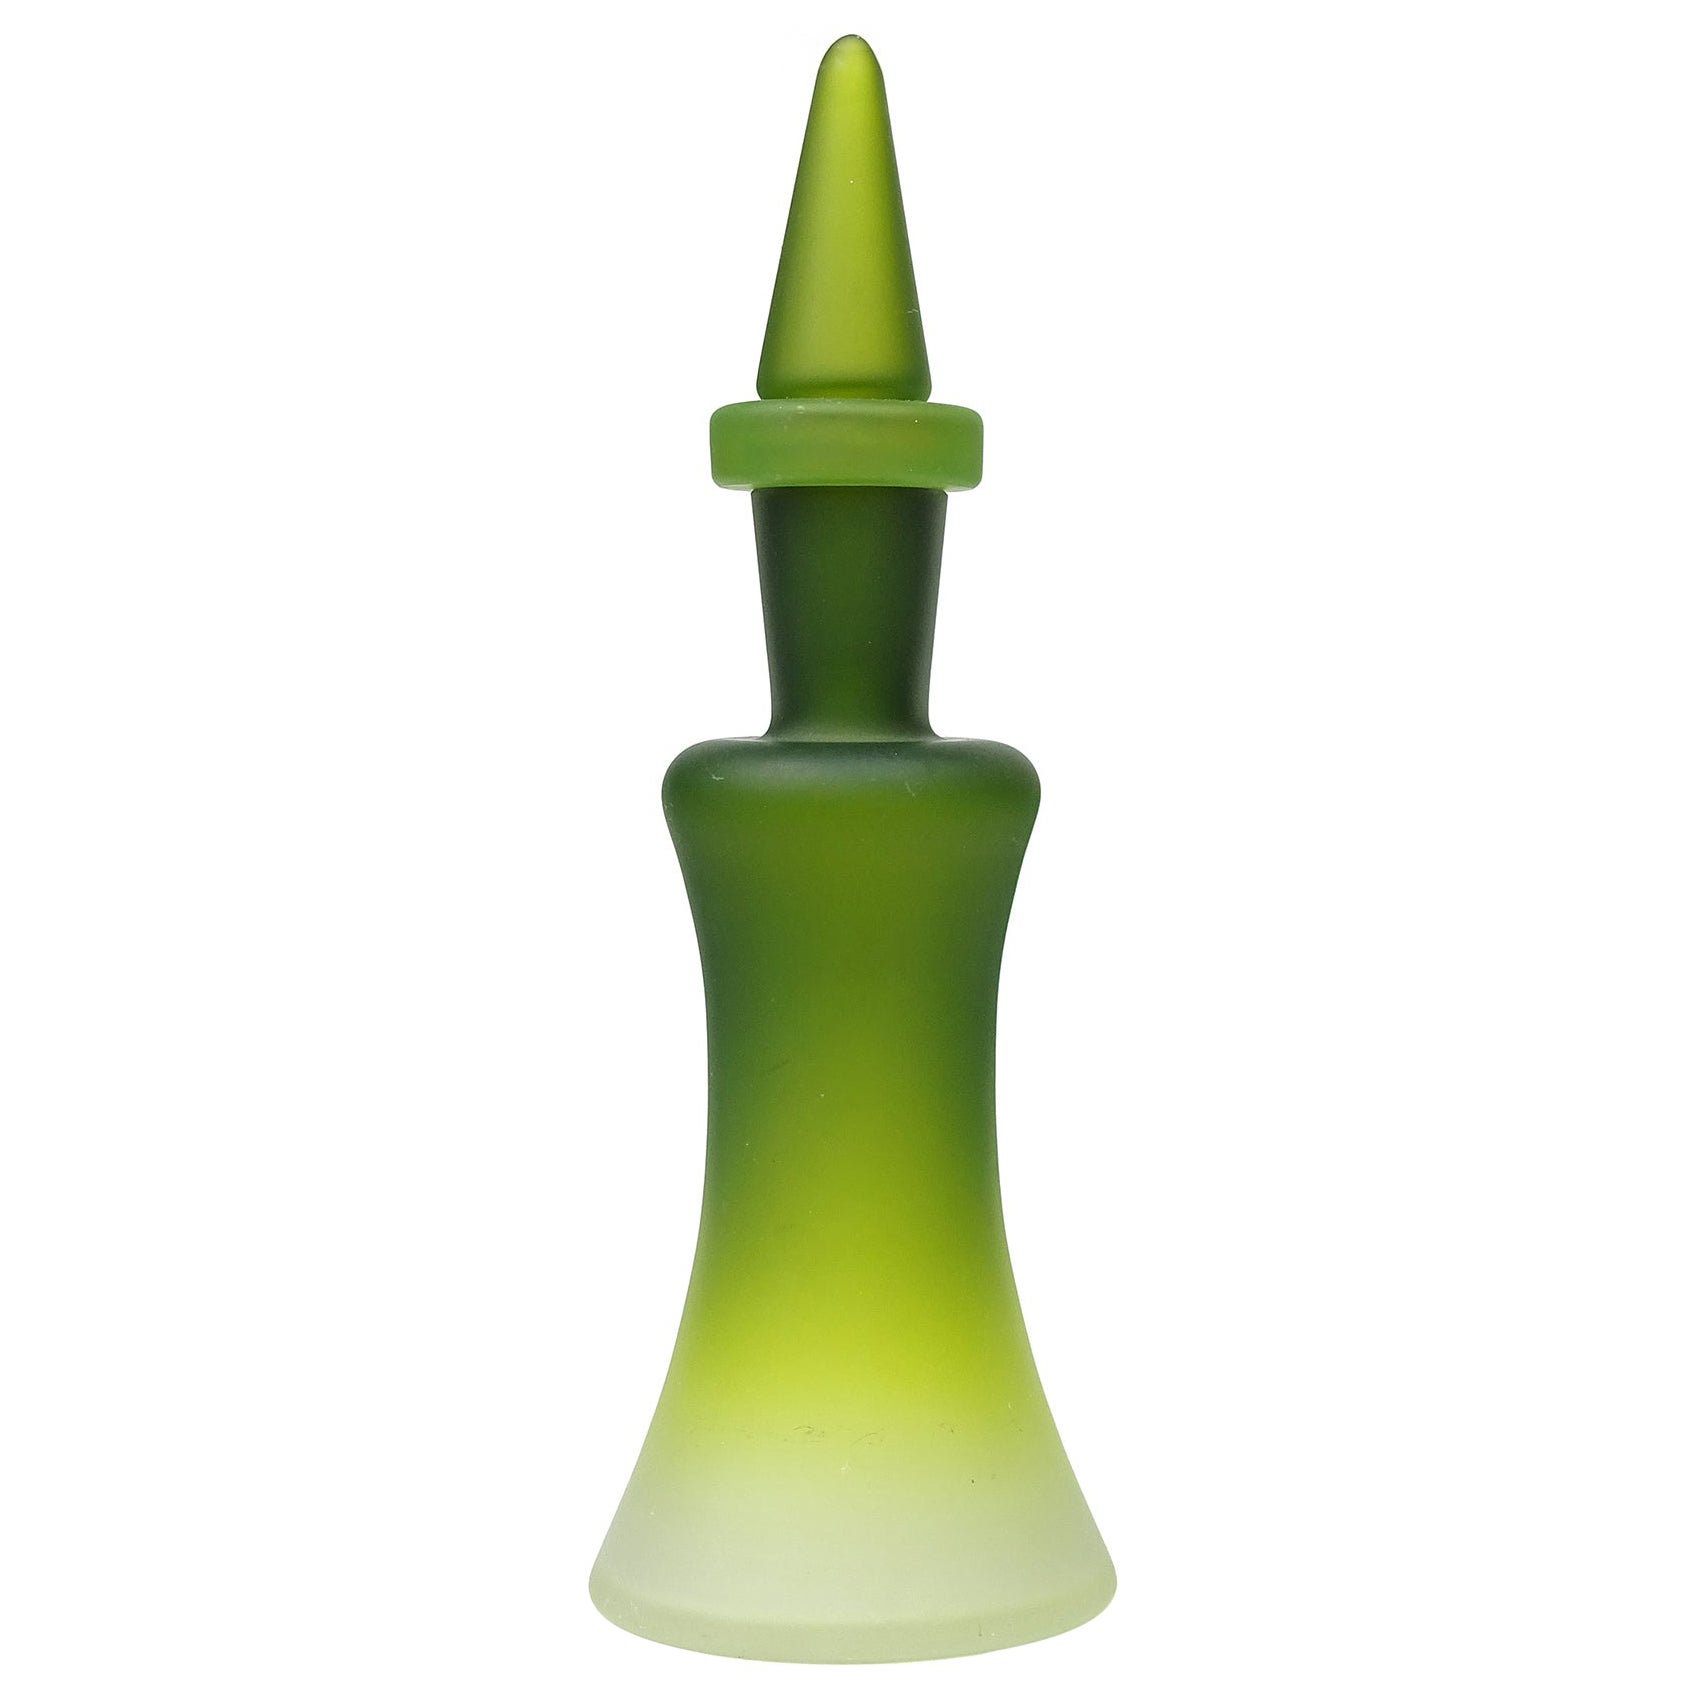 Ermanno Toso Murano Satin Green to White Italian Art Glass Bottle Decanter